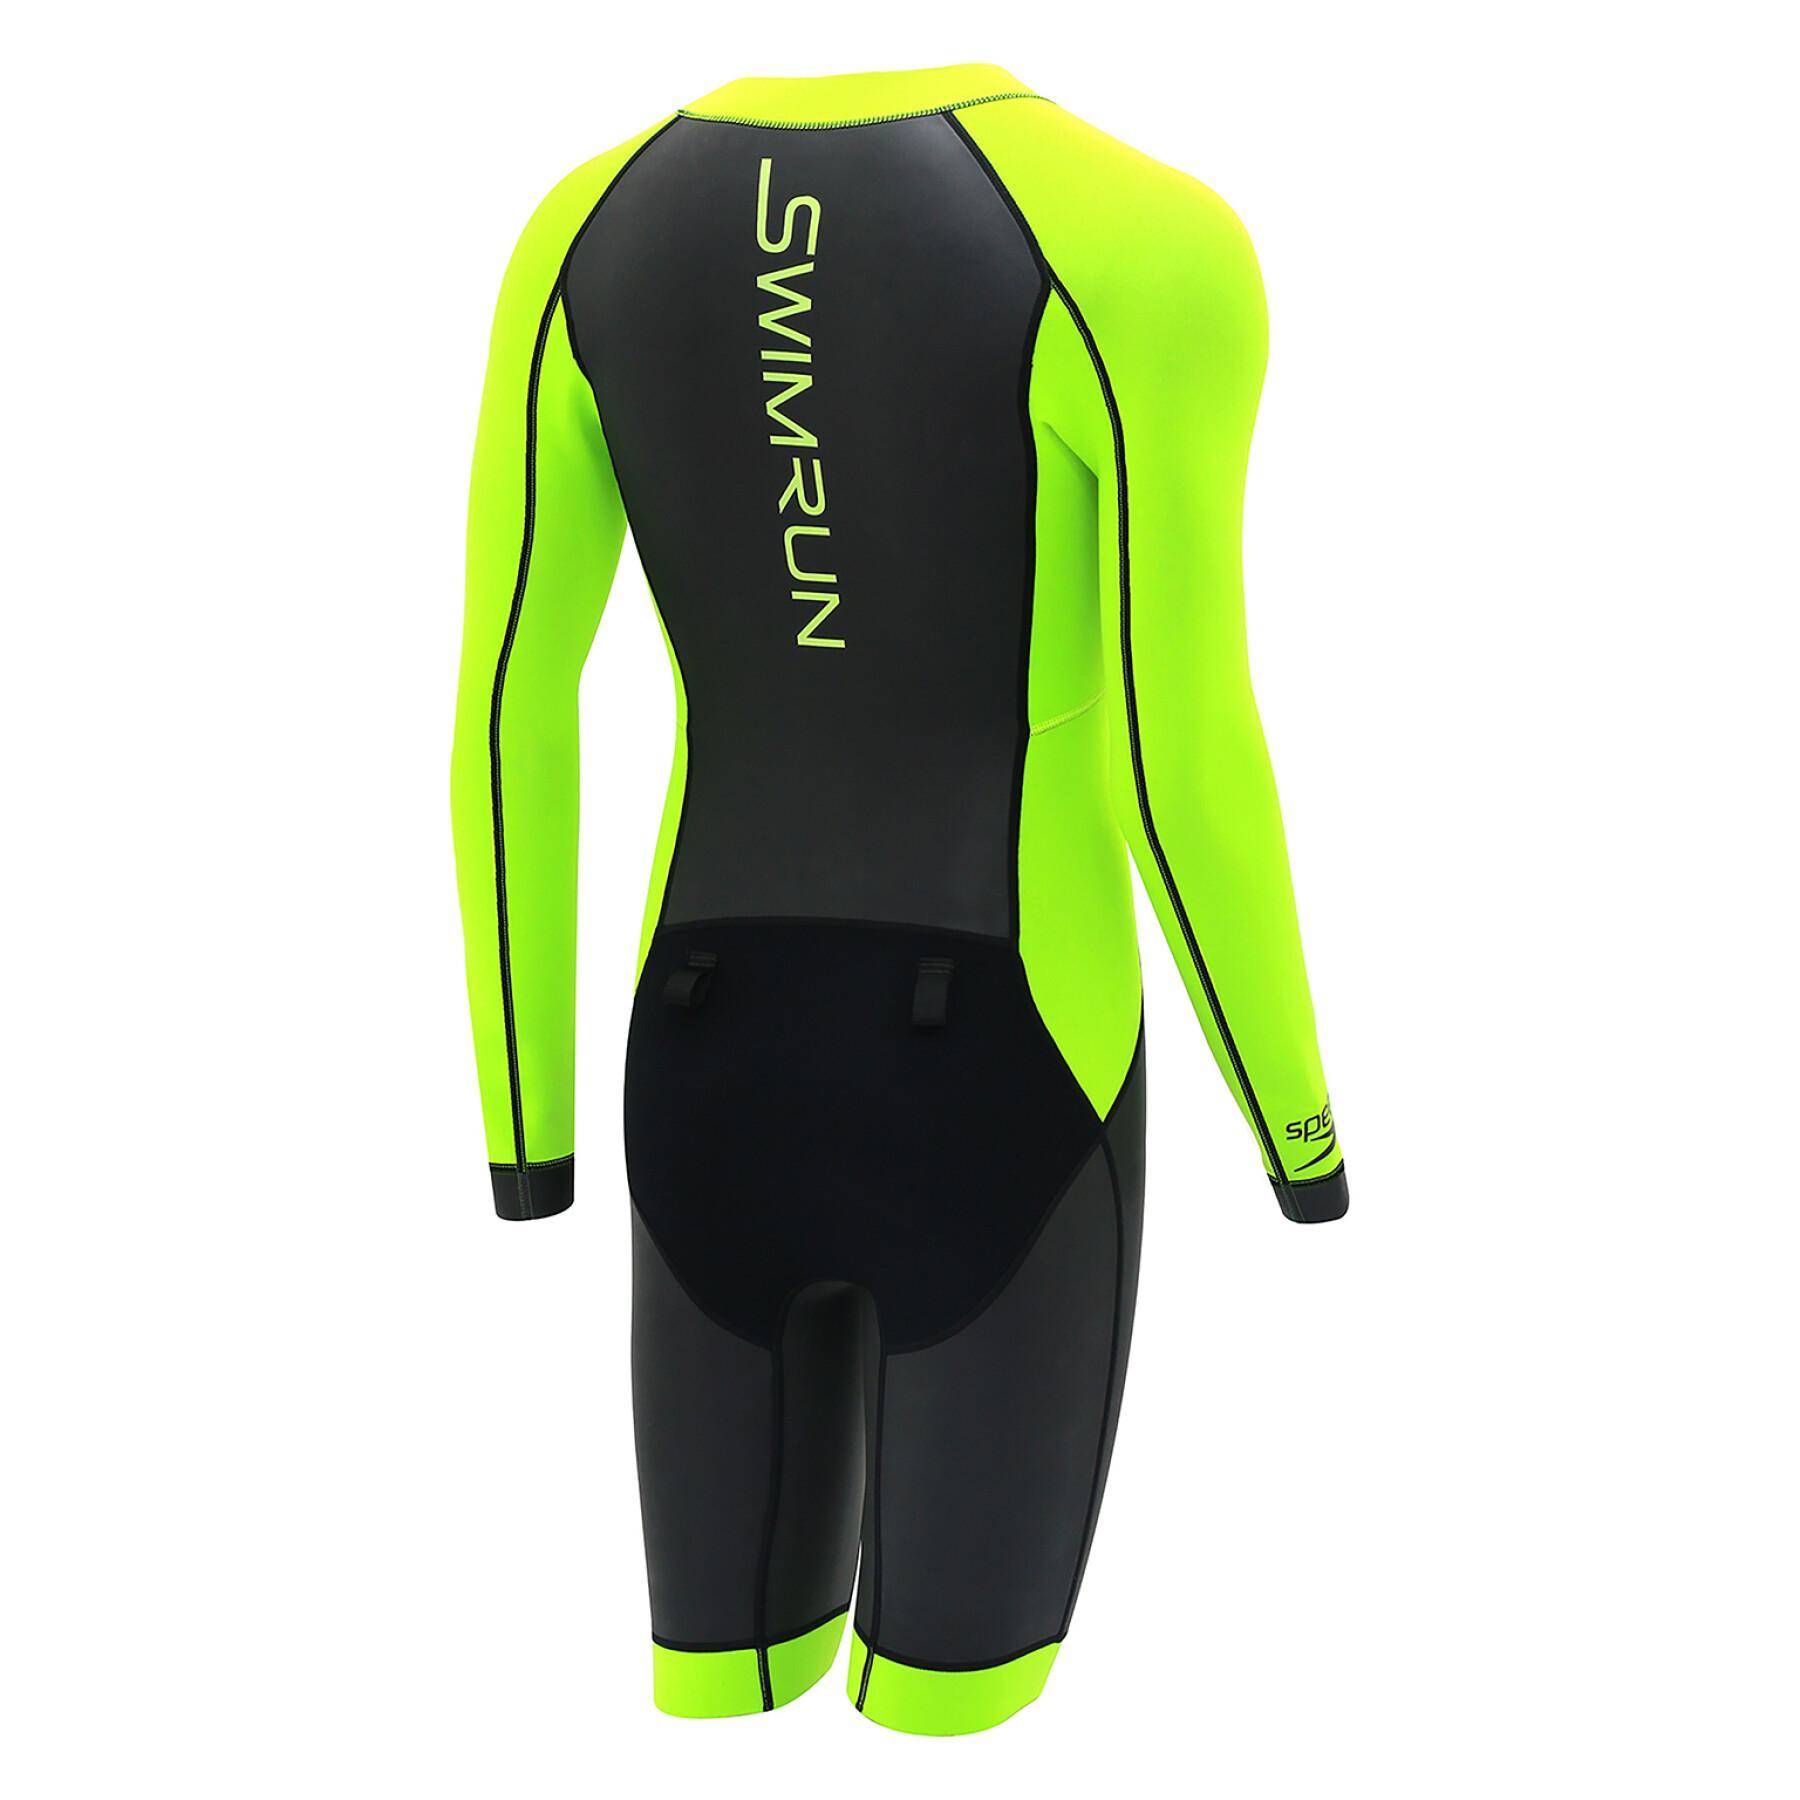 Swimrun suit Speedo 2.0